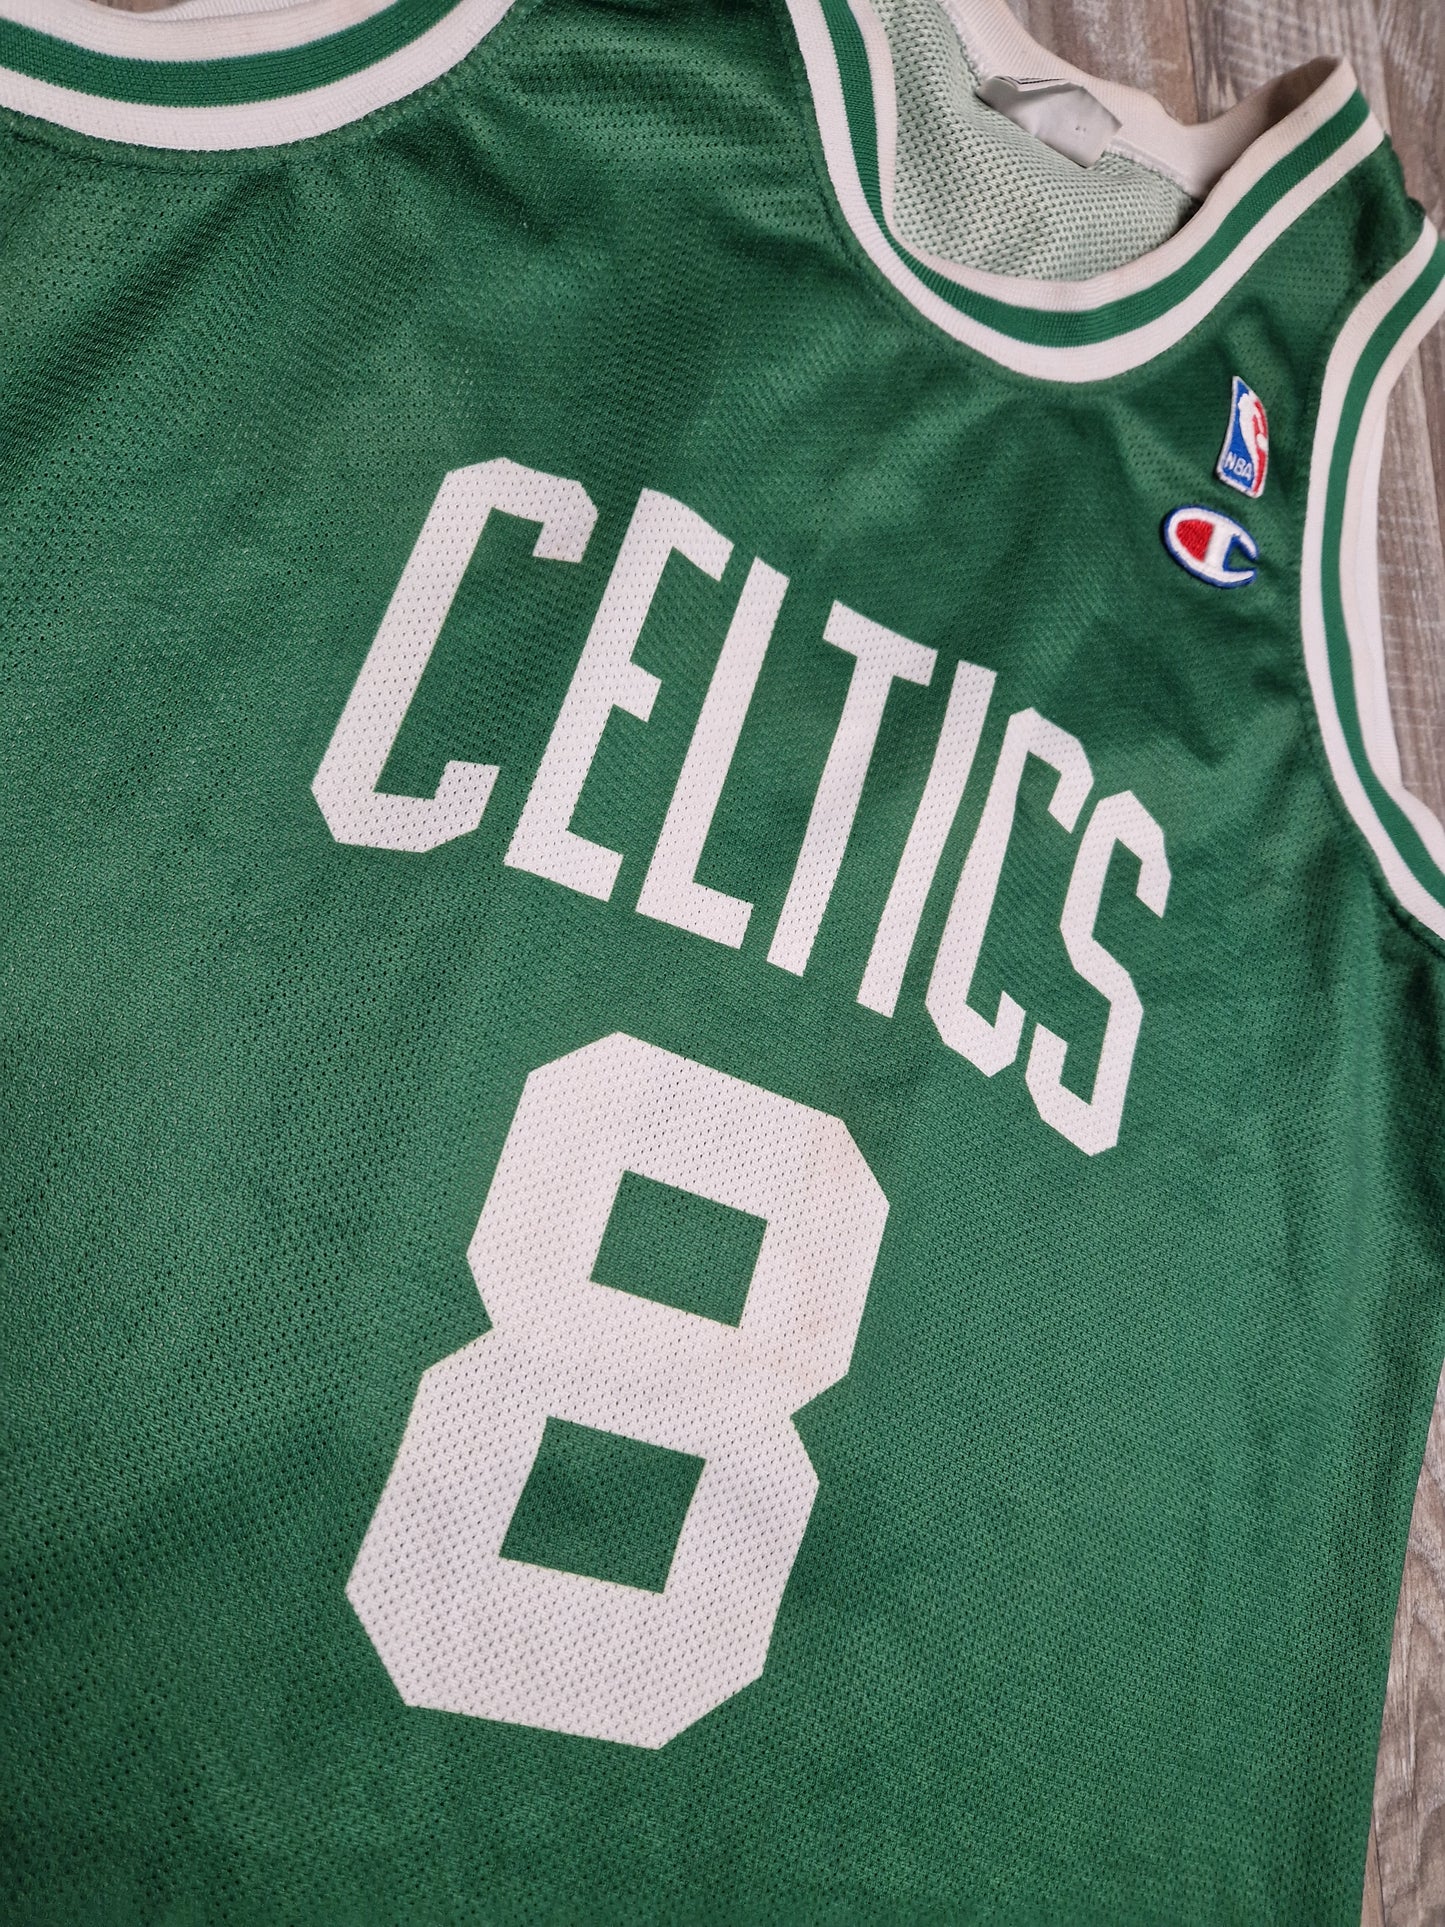 Antoine Walker Boston Celtics Jersey Size Medium